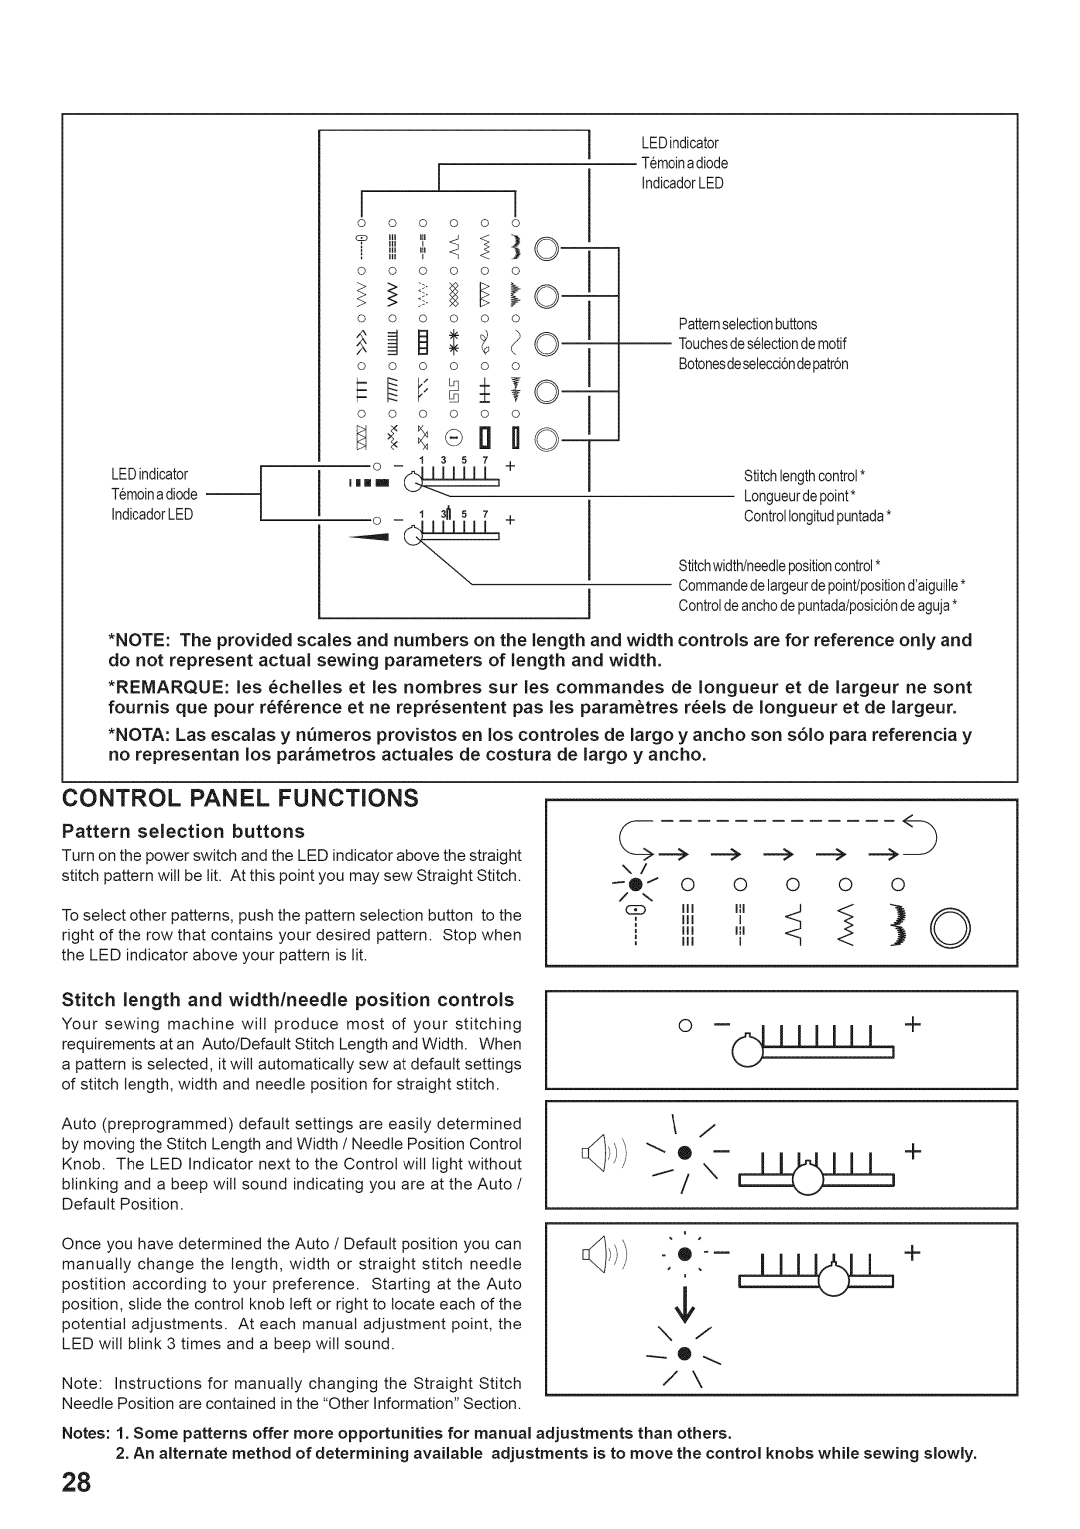 Singer 7442 manual o -djjjjjL , +, Control Panel Functions 